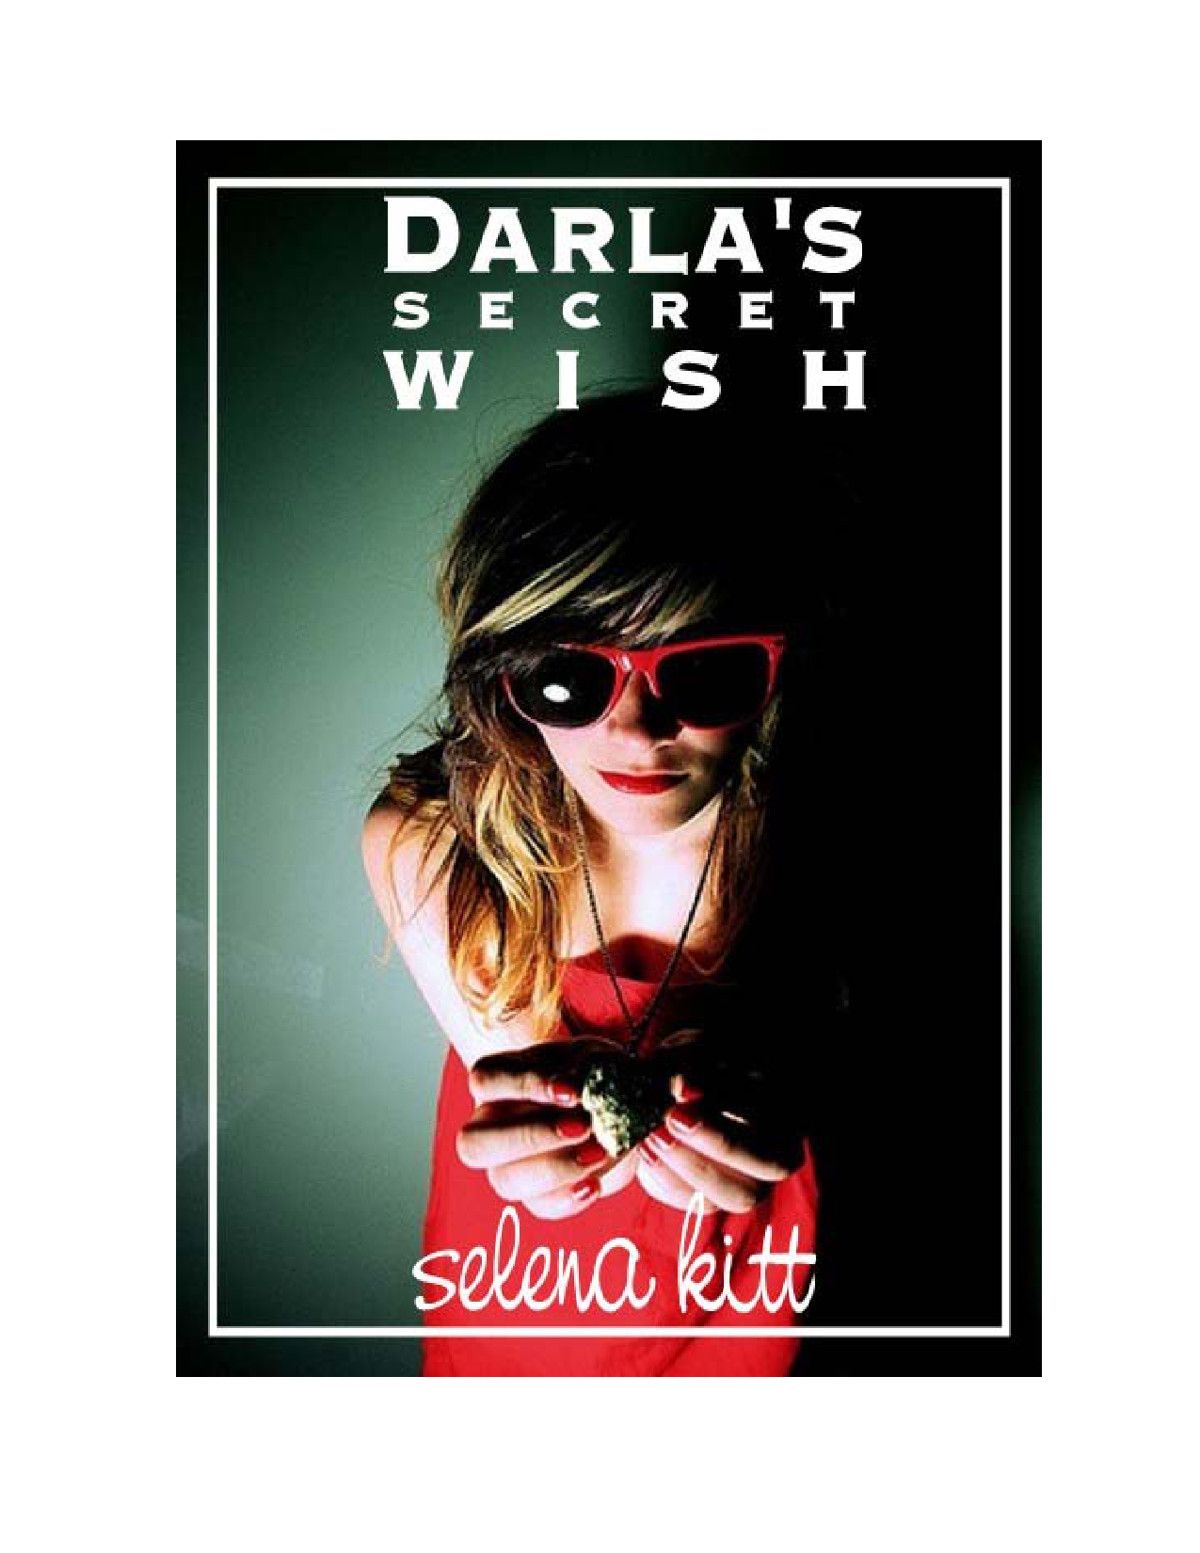 Darla's secret wish